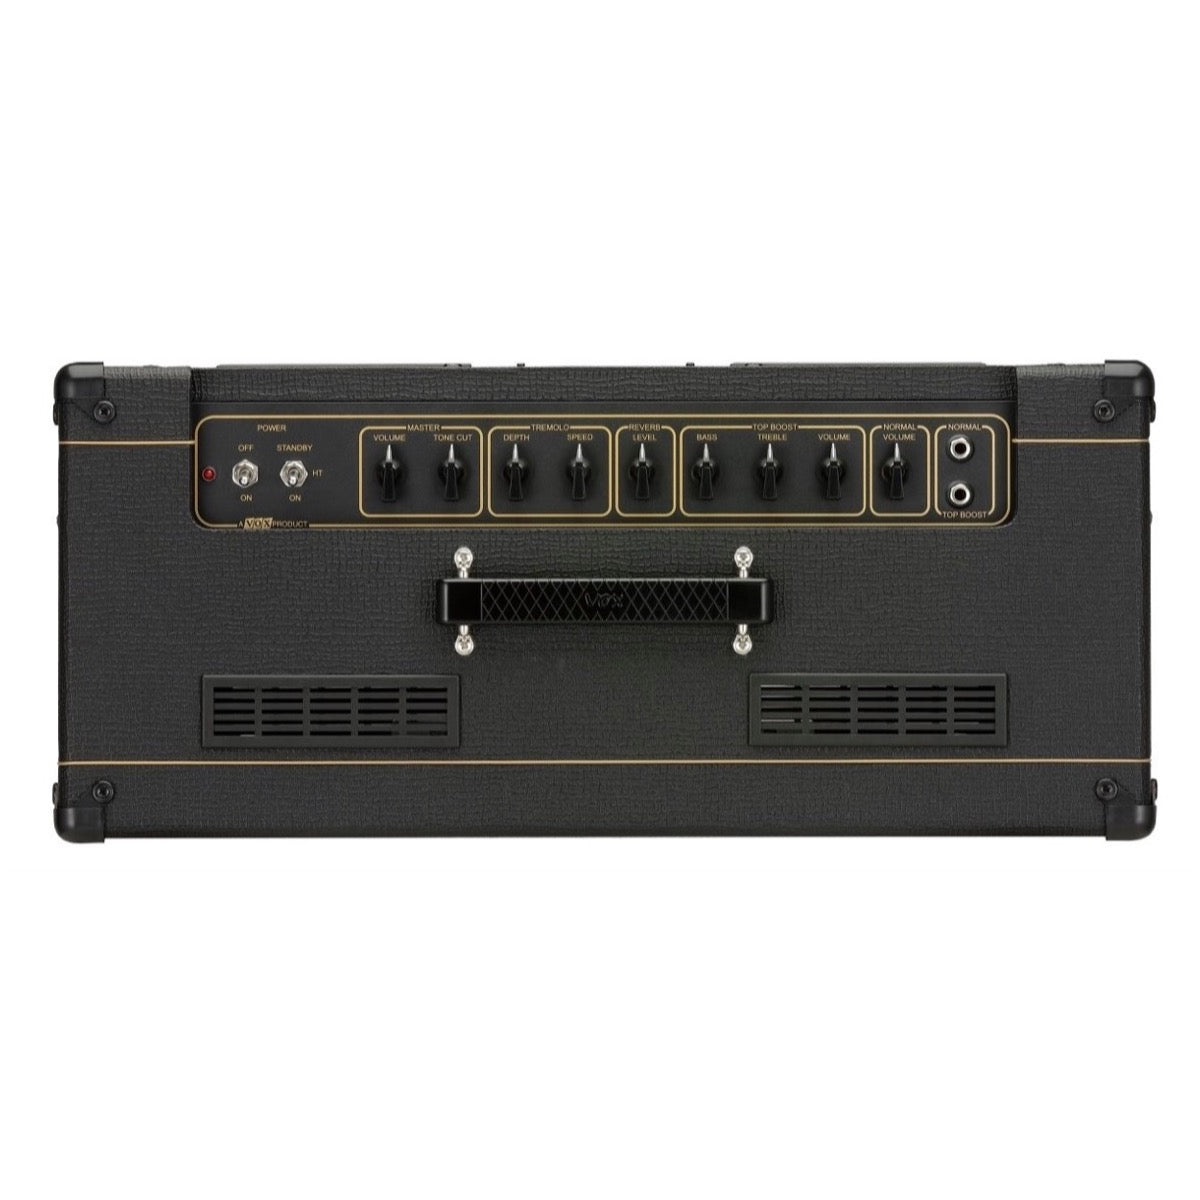 Vox AC15CH Custom Guitar Amplifier Head (15 Watts)